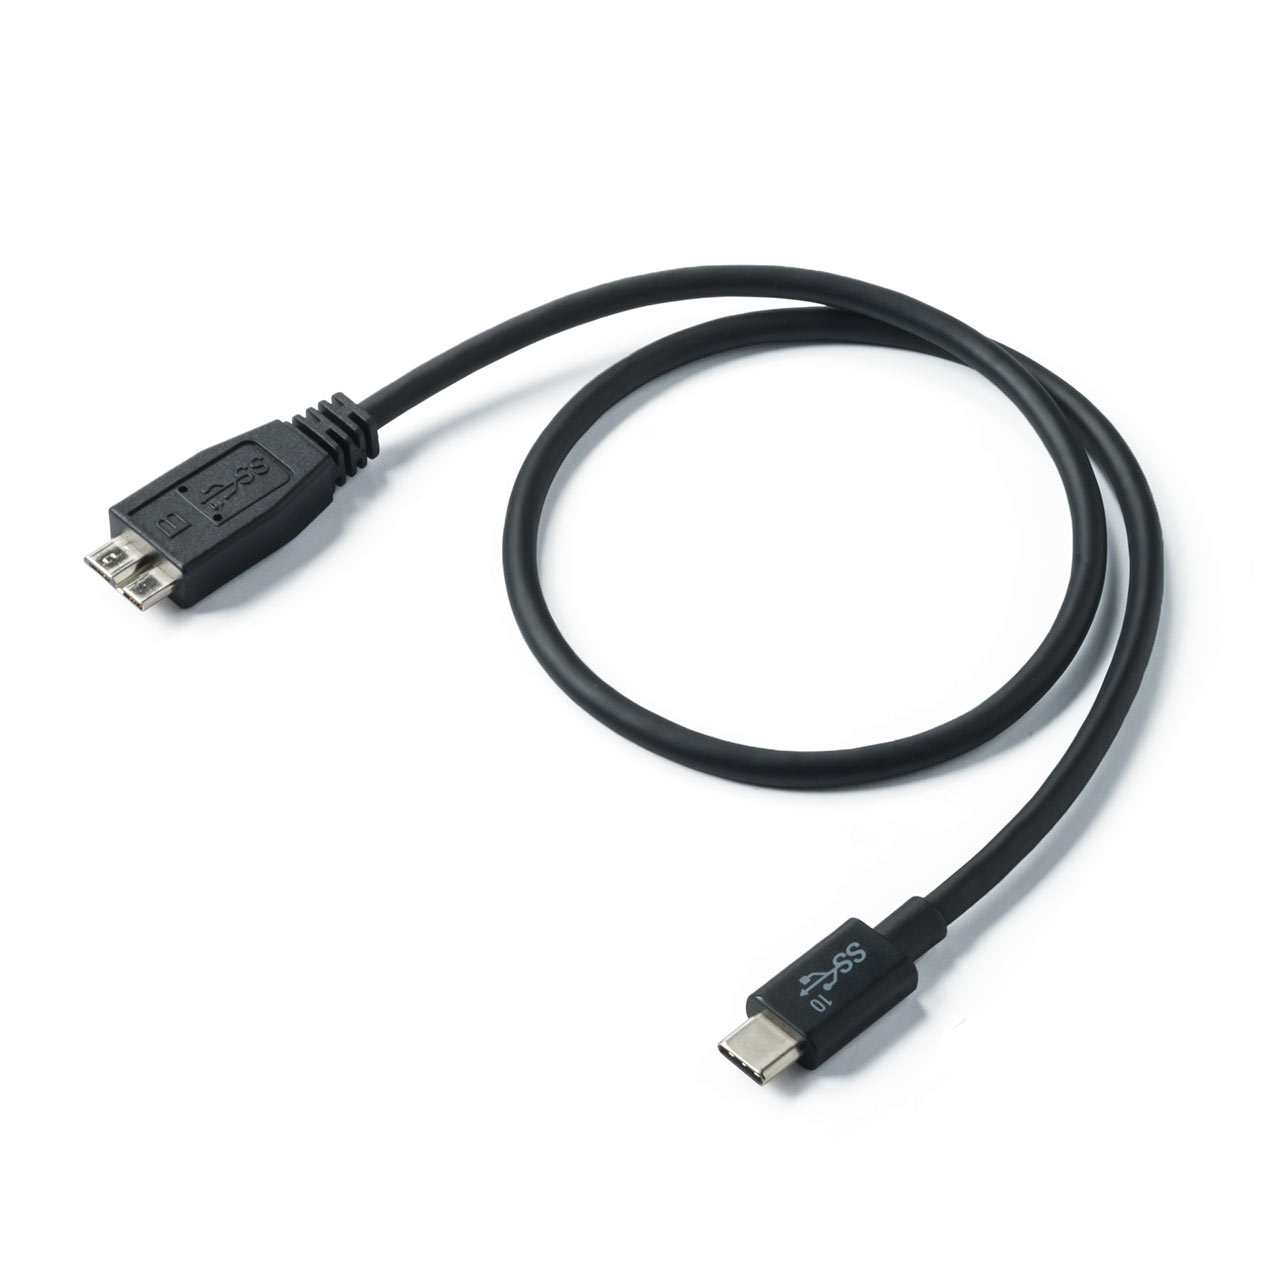 USB Type-CP[u 0.5m USB3.1 Gen2 USB Type-C-microBRlN^ USB-IFFؕi ubN 500-USB054-05